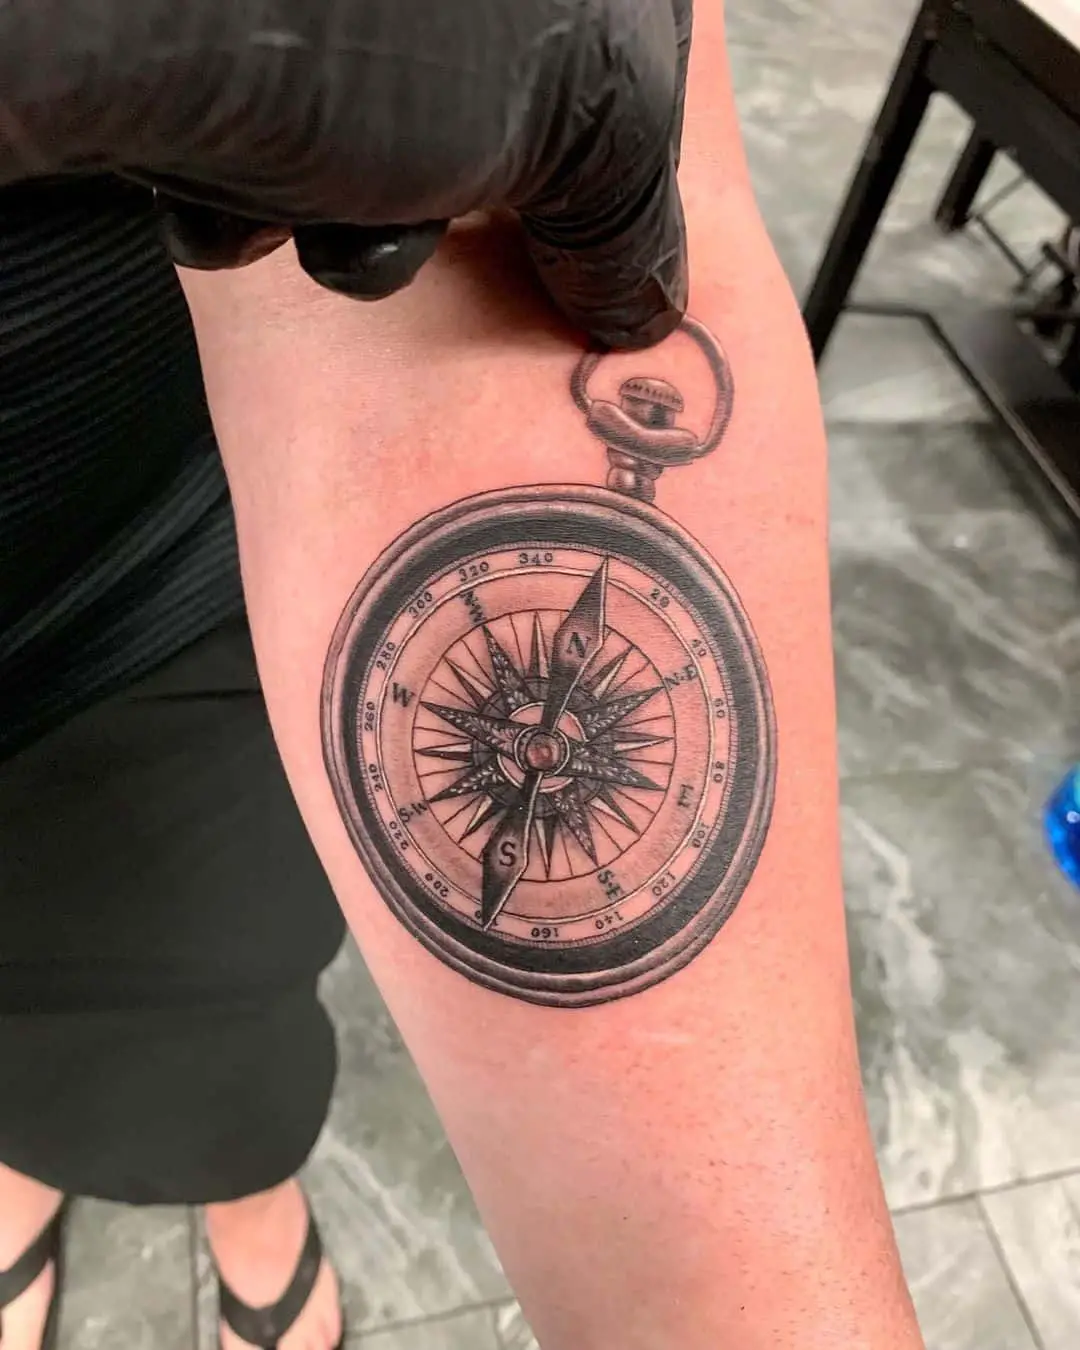 Sacred Ink Tattoo on Twitter Nautical hand piece done by Pickles  tattoosbypickles compass compasstattoo blackandgreytattoo handtattoo  ottawa sacredinkottawa igotinkedatsacredink httpstcoO5HyAJ3kuM   Twitter